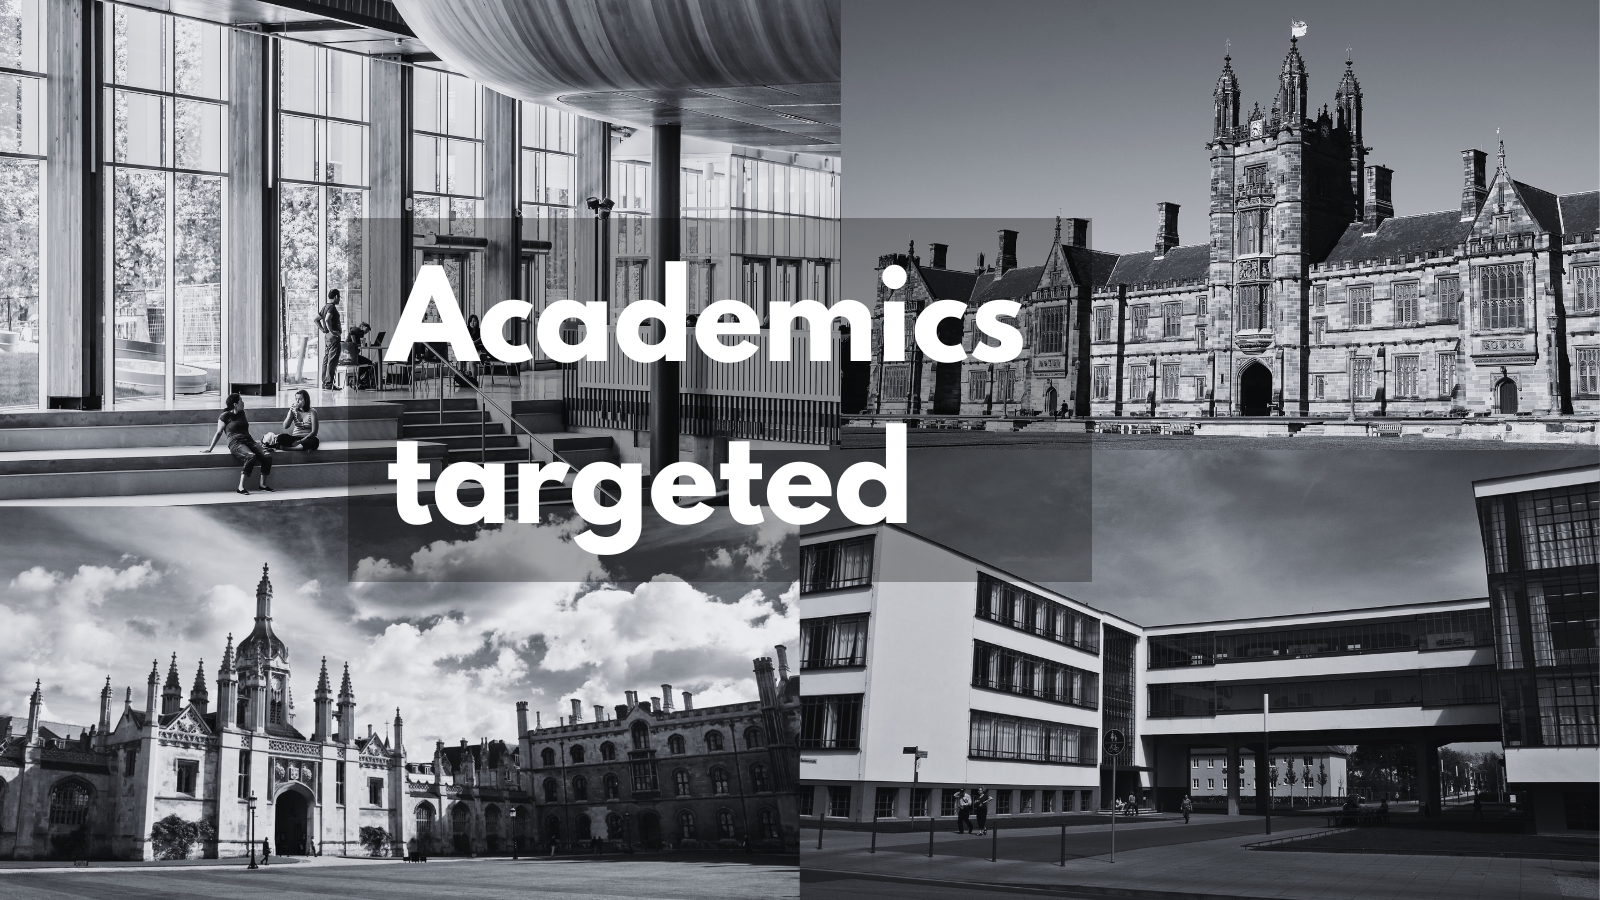 Academics targeted